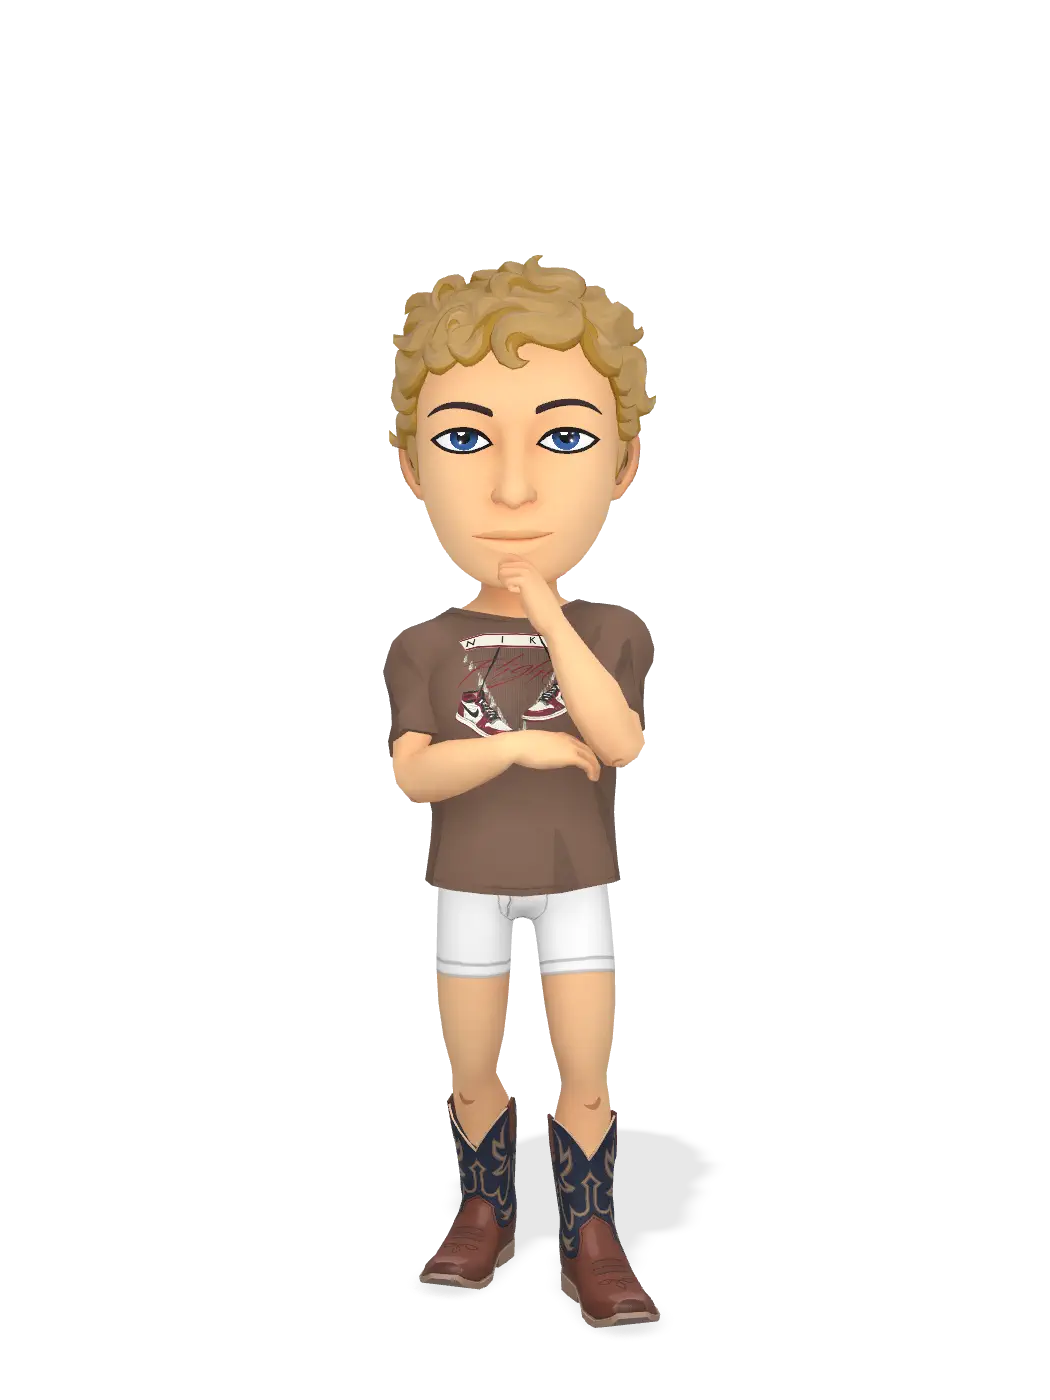 3D Bitmoji for hchreene avatar